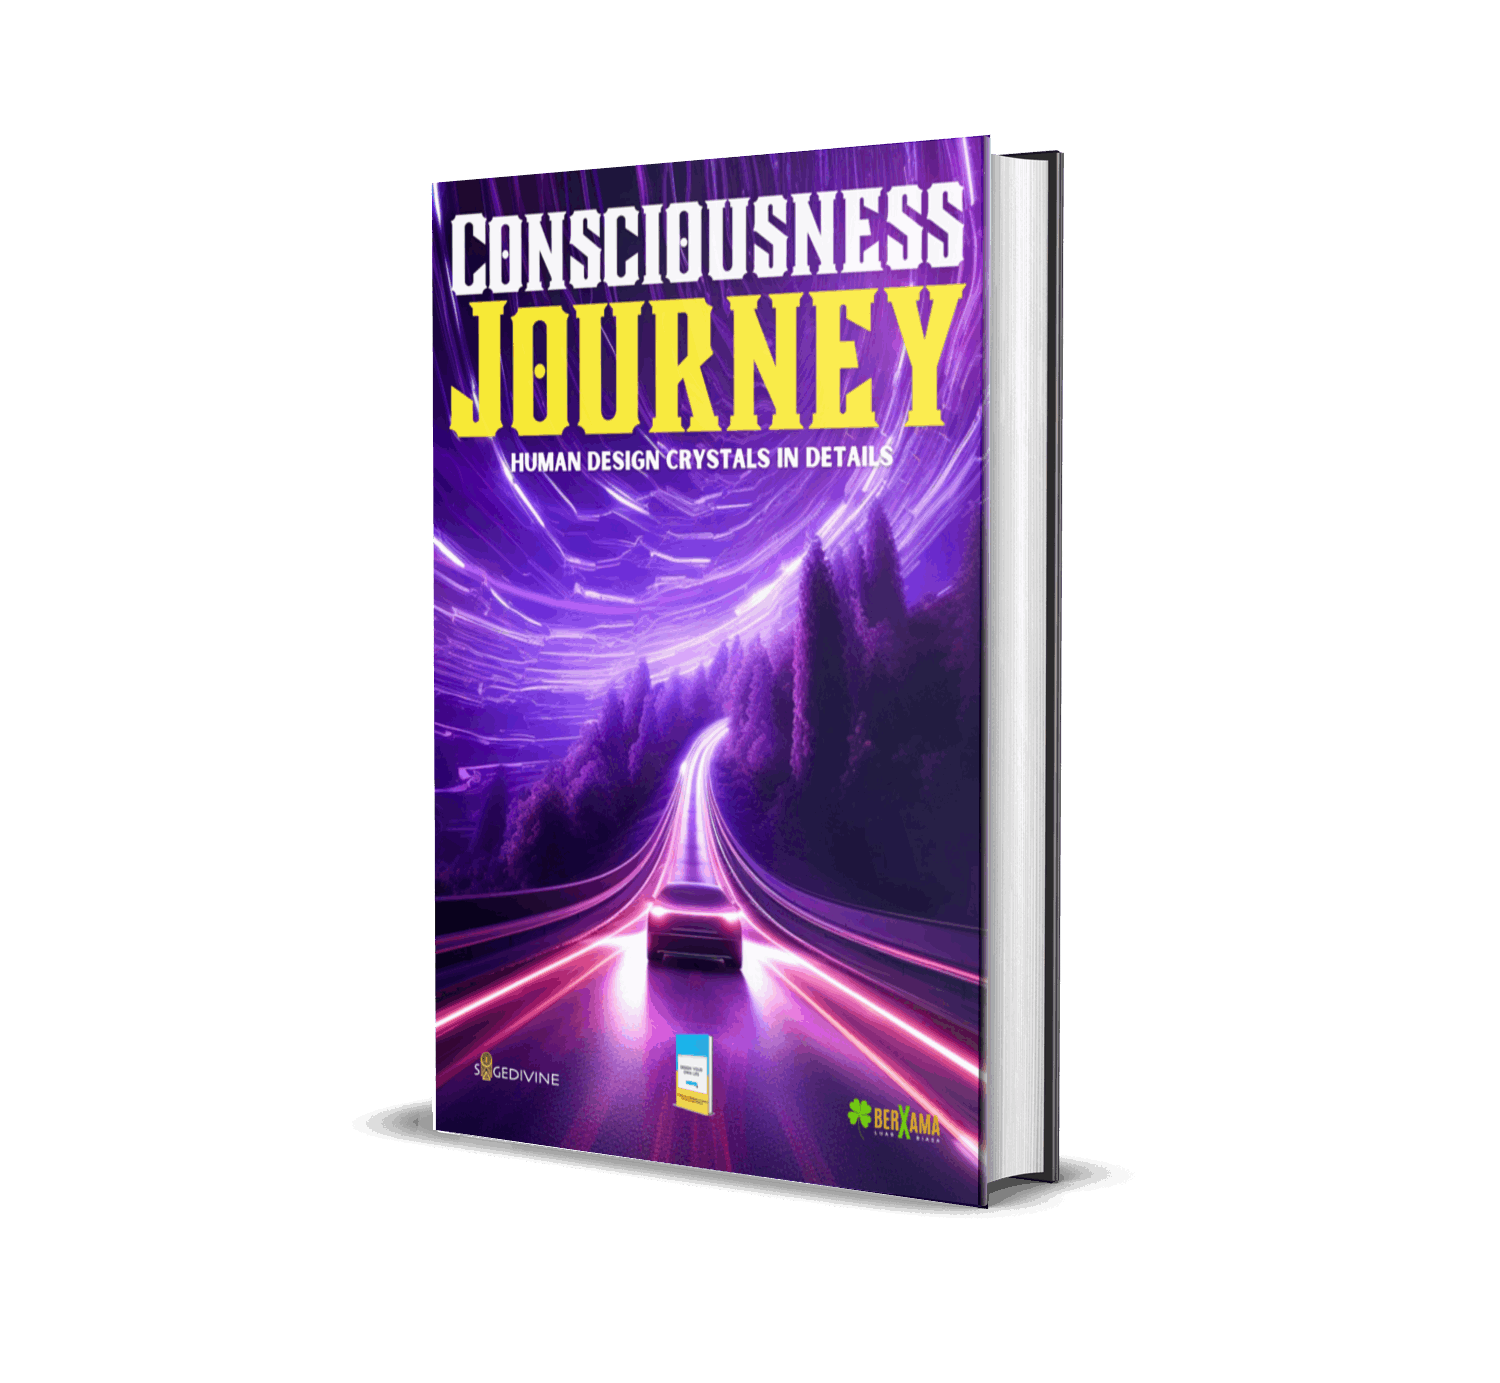 Consciousness Journey - Human Design Crystals